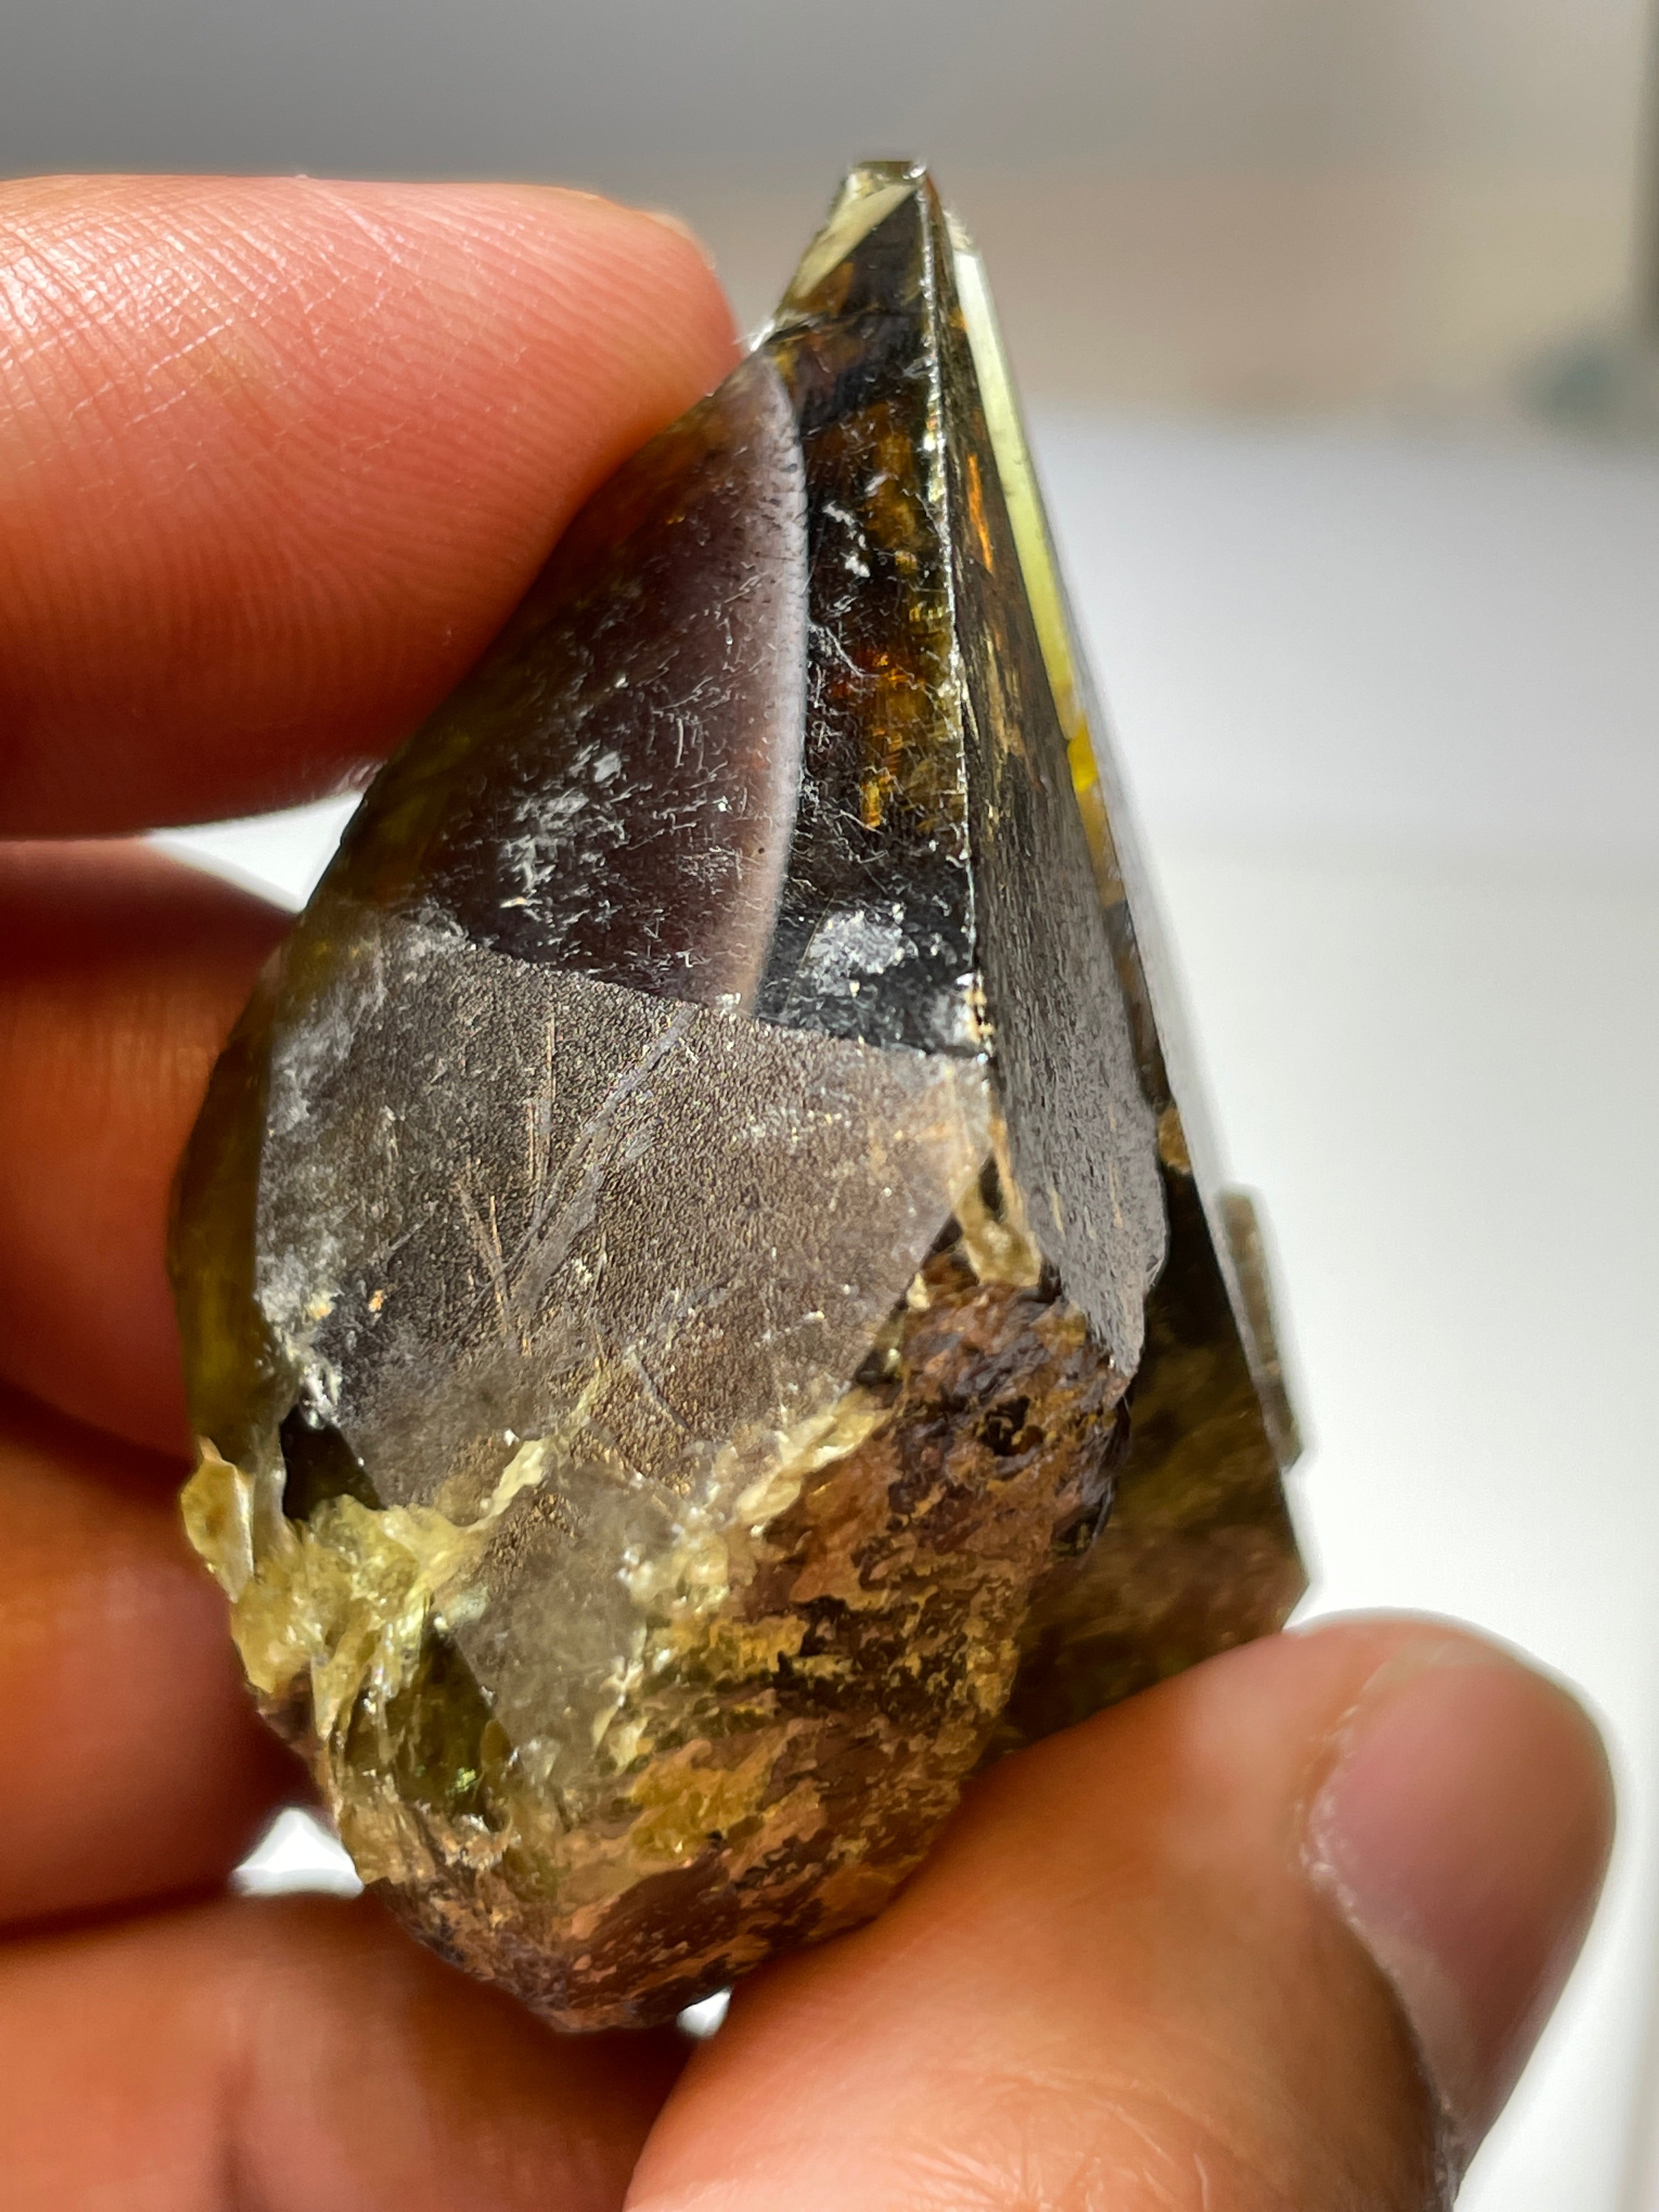 241.59Ct / 43.31Gm Tanzanian Sphene Crystal Untreated Unheated. Very High End Ultra Rare